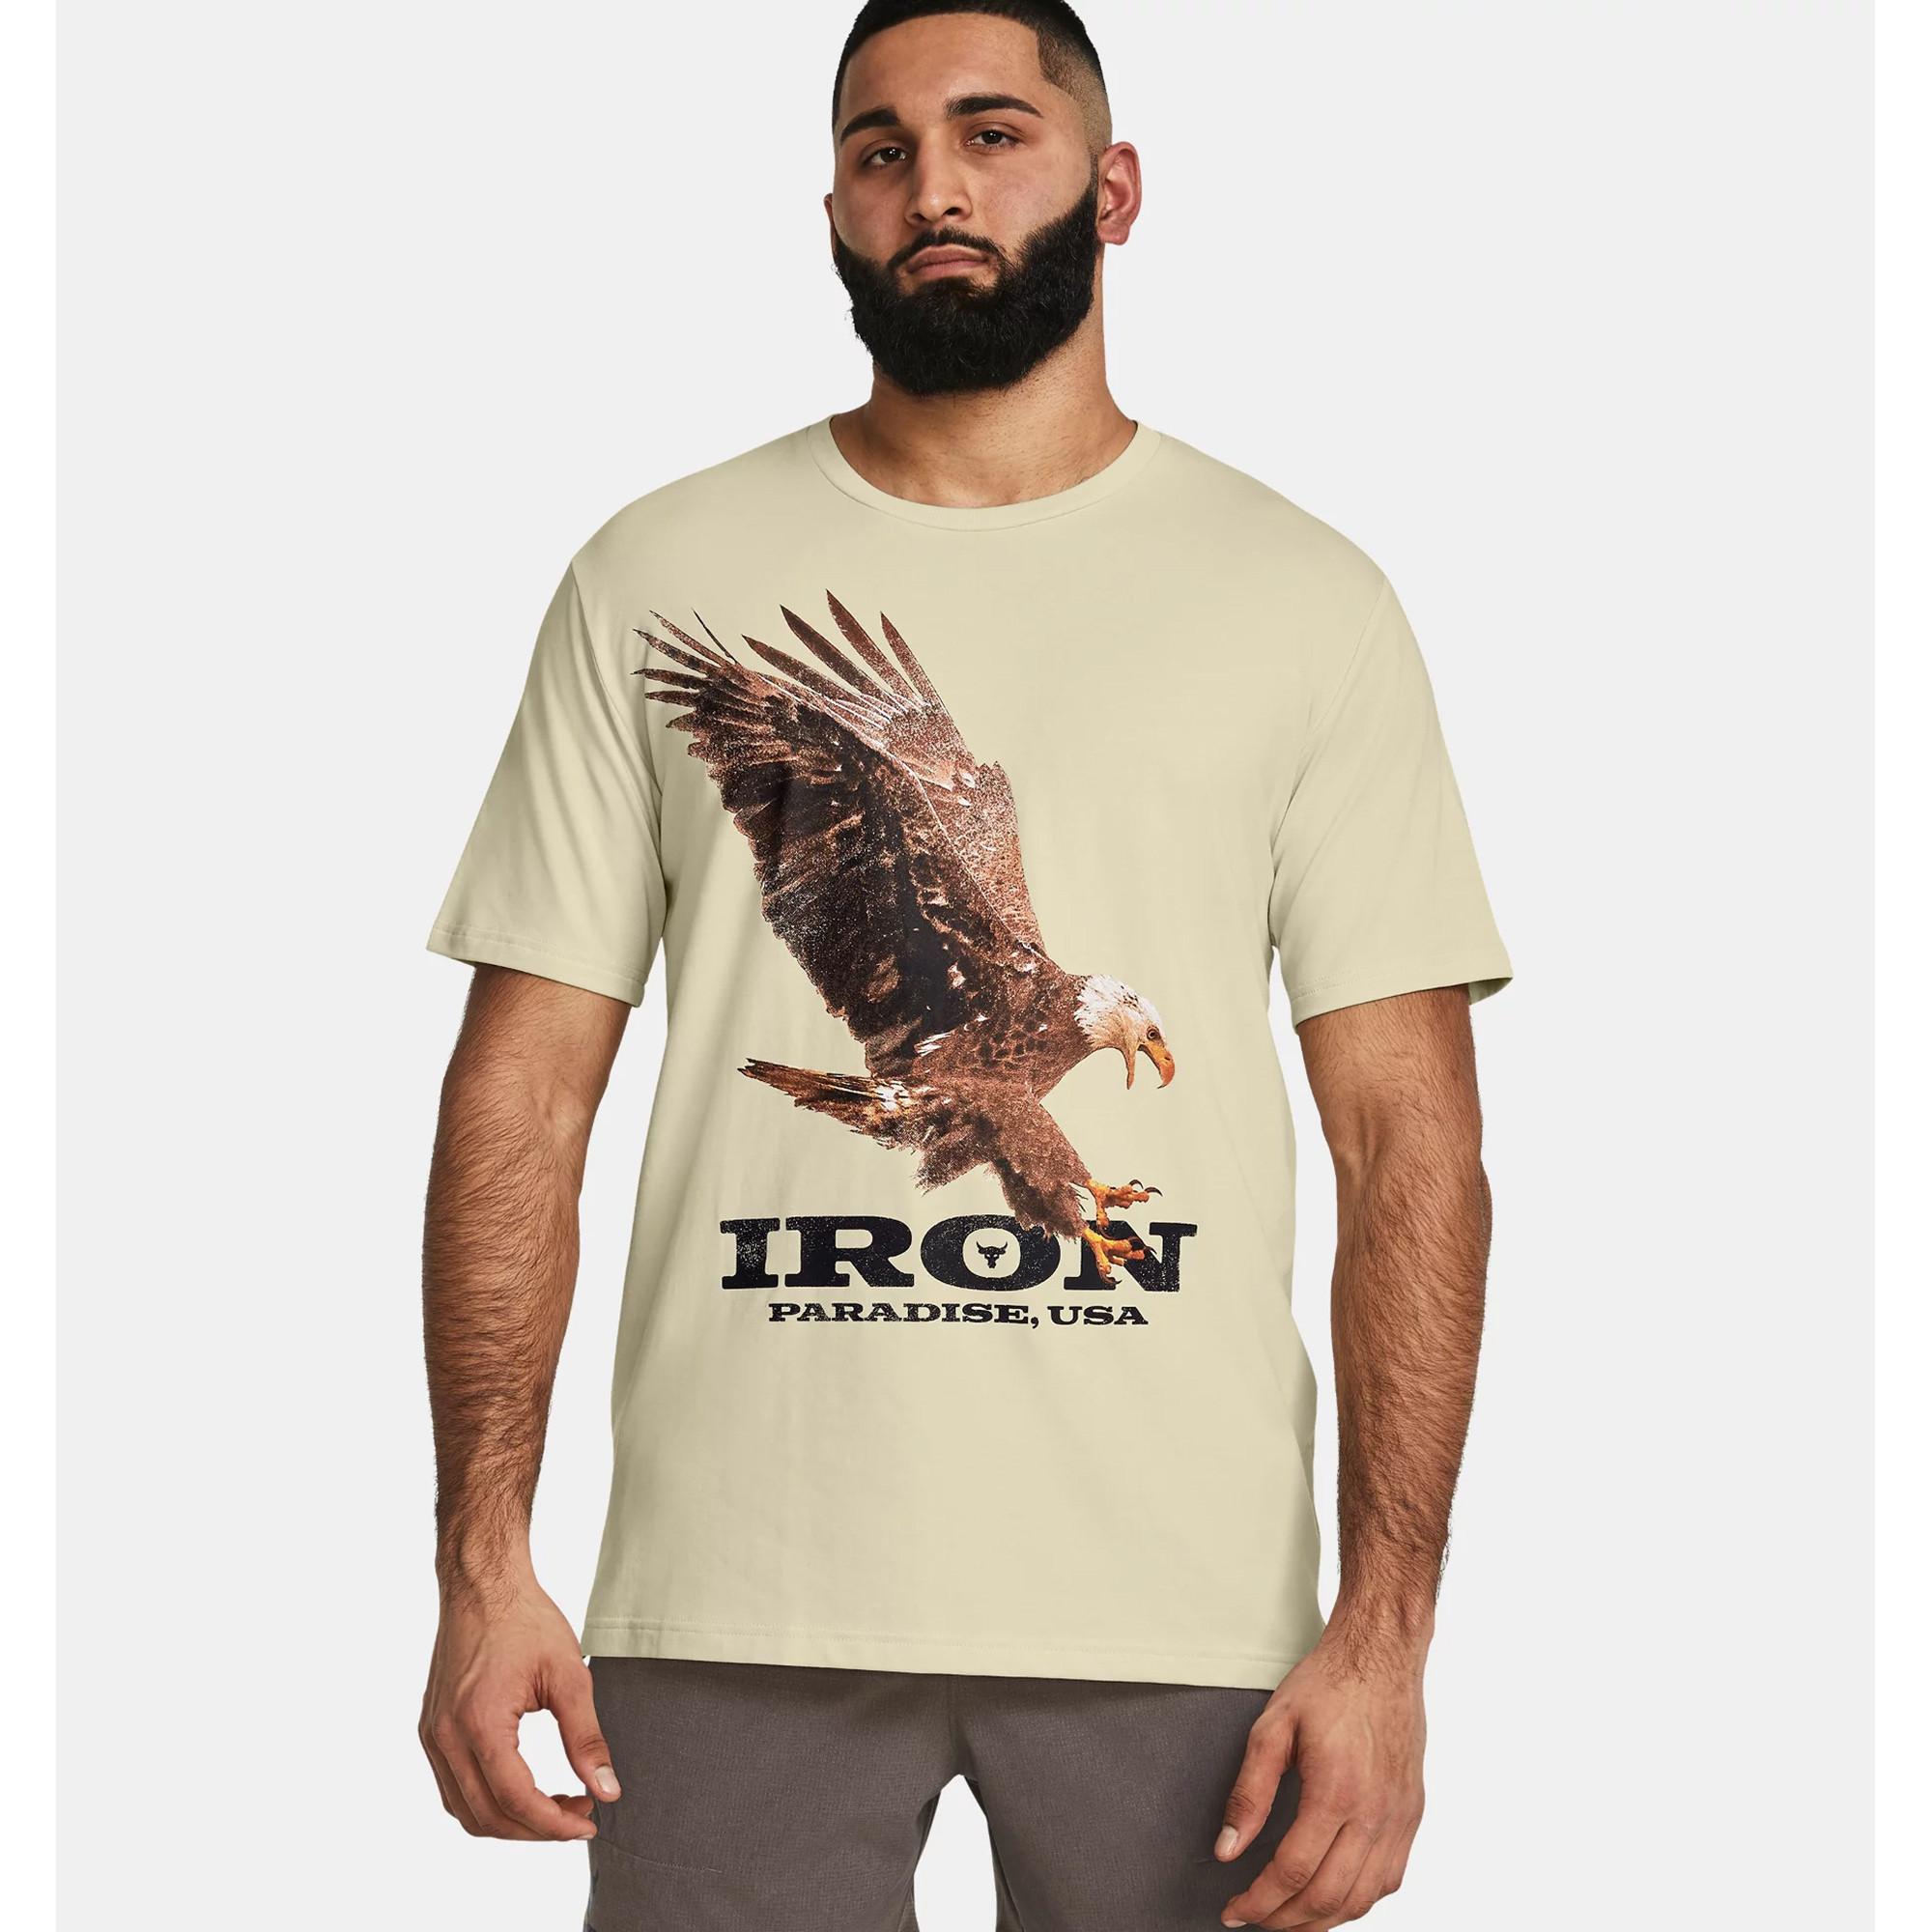 UNDER ARMOUR UA Pjt Rck Eagle Graphic SS T-shirt, col rond, manches courtes 